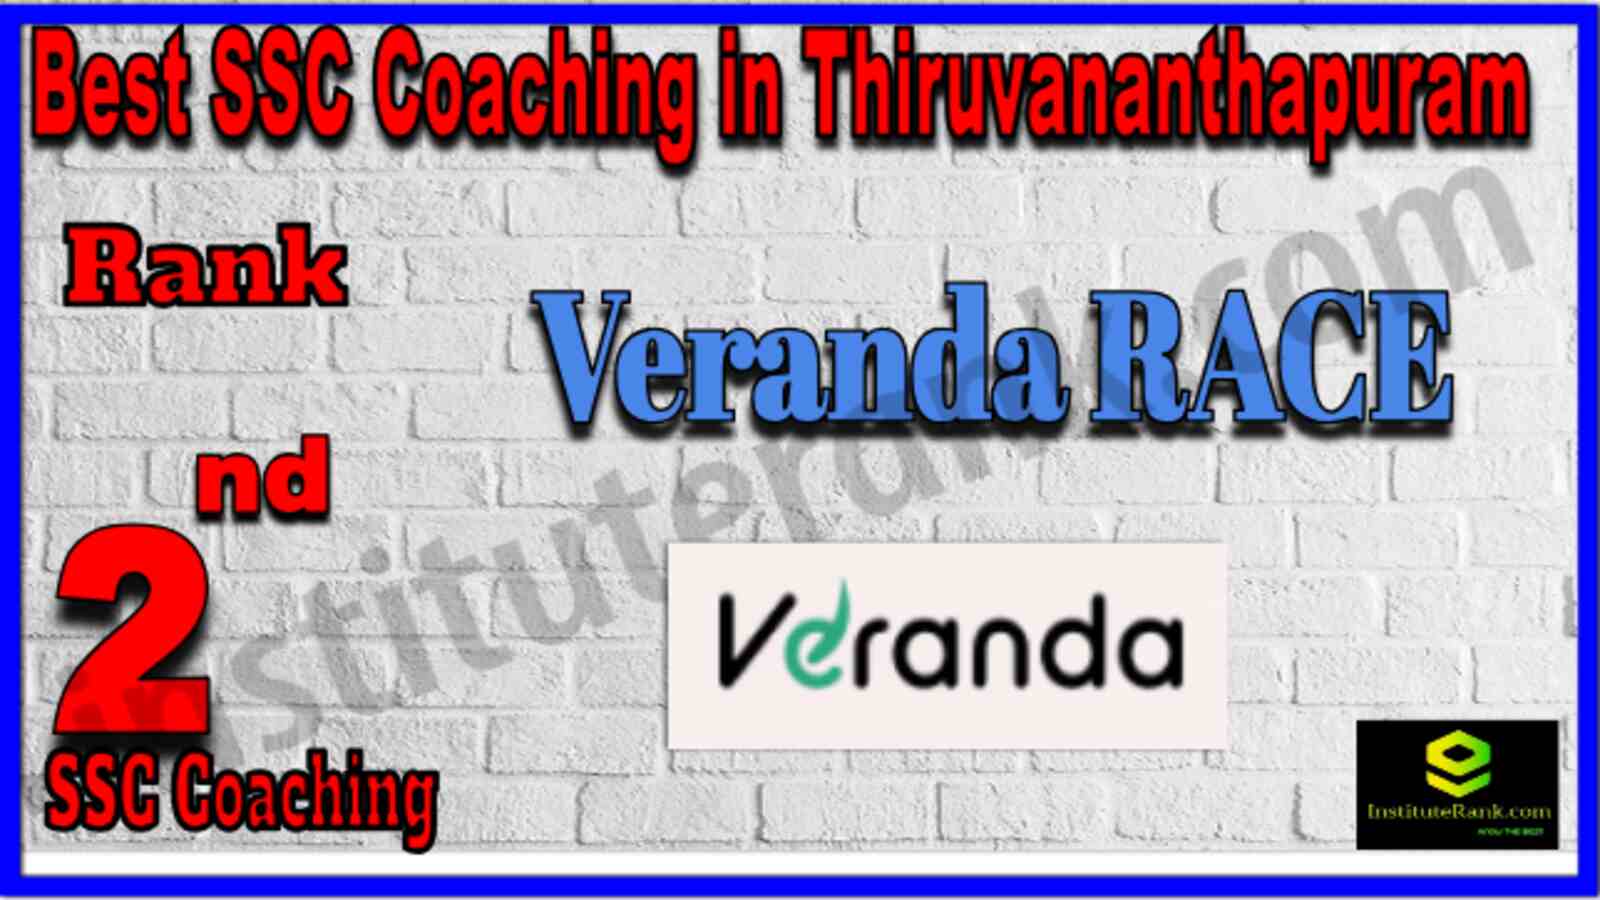 Rank 2 Best SSC Coaching Institute in Thiruvananthapuram